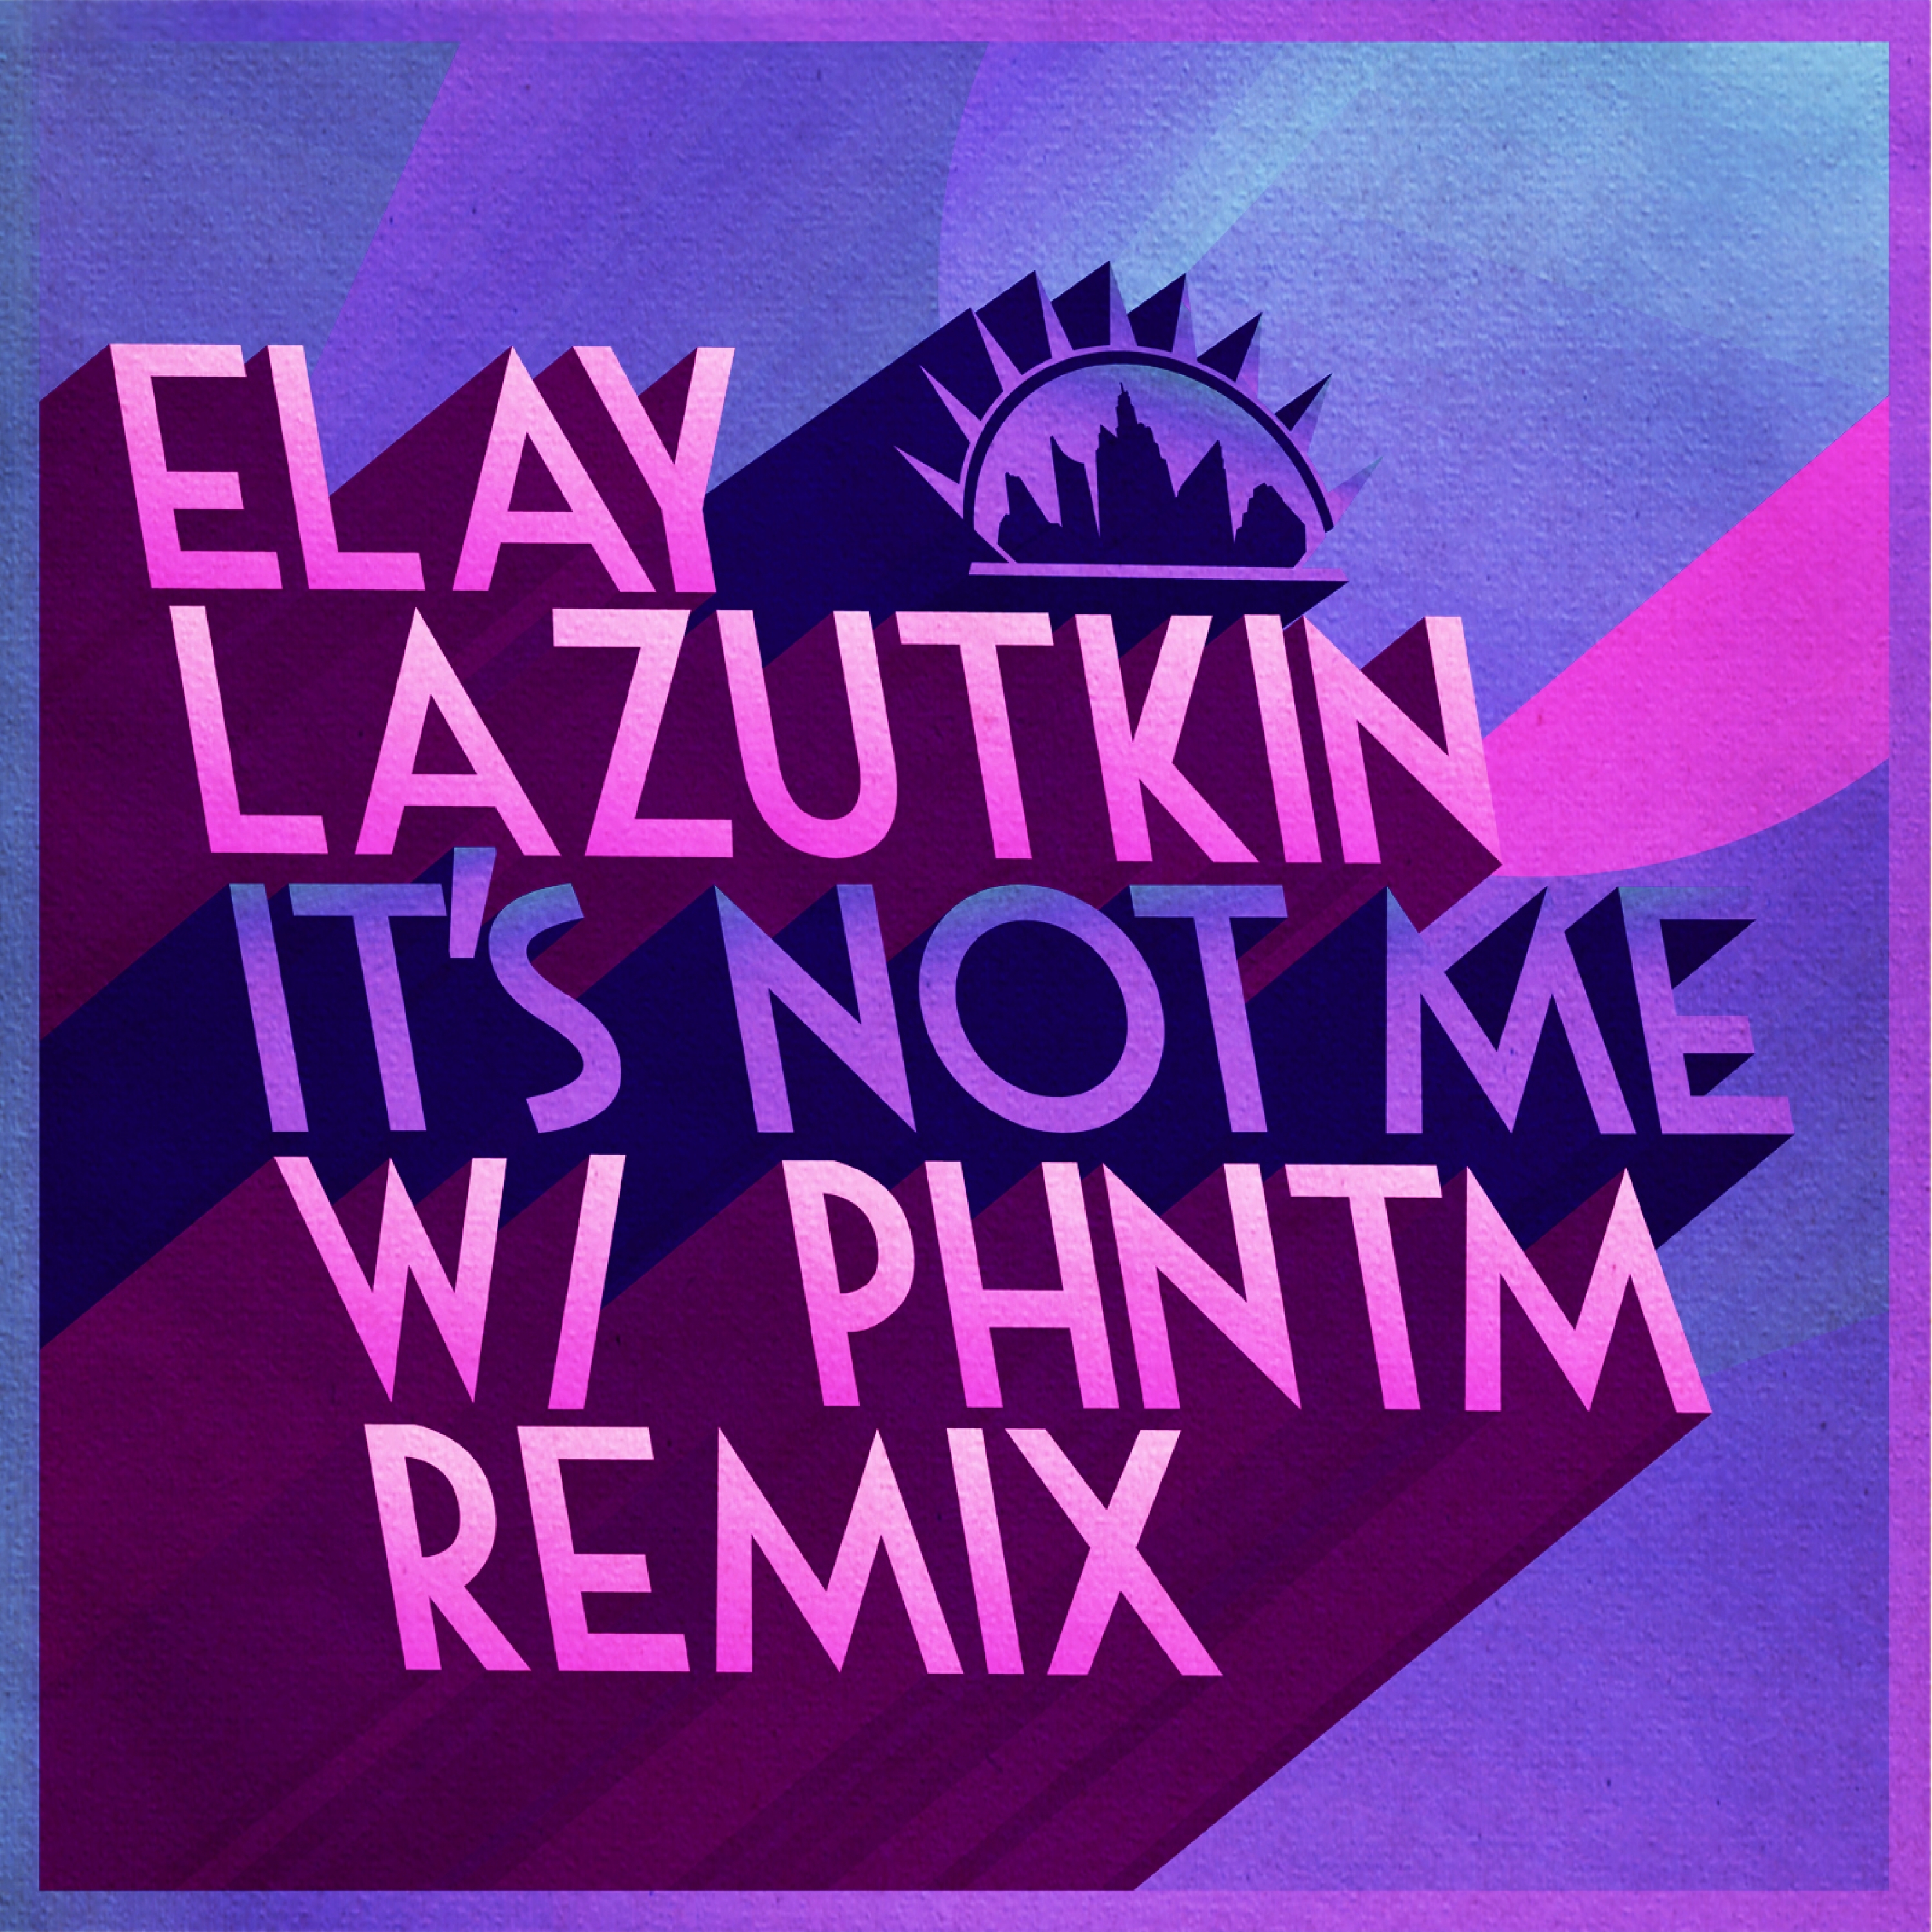 It's Not Me (PHNTM Remix)